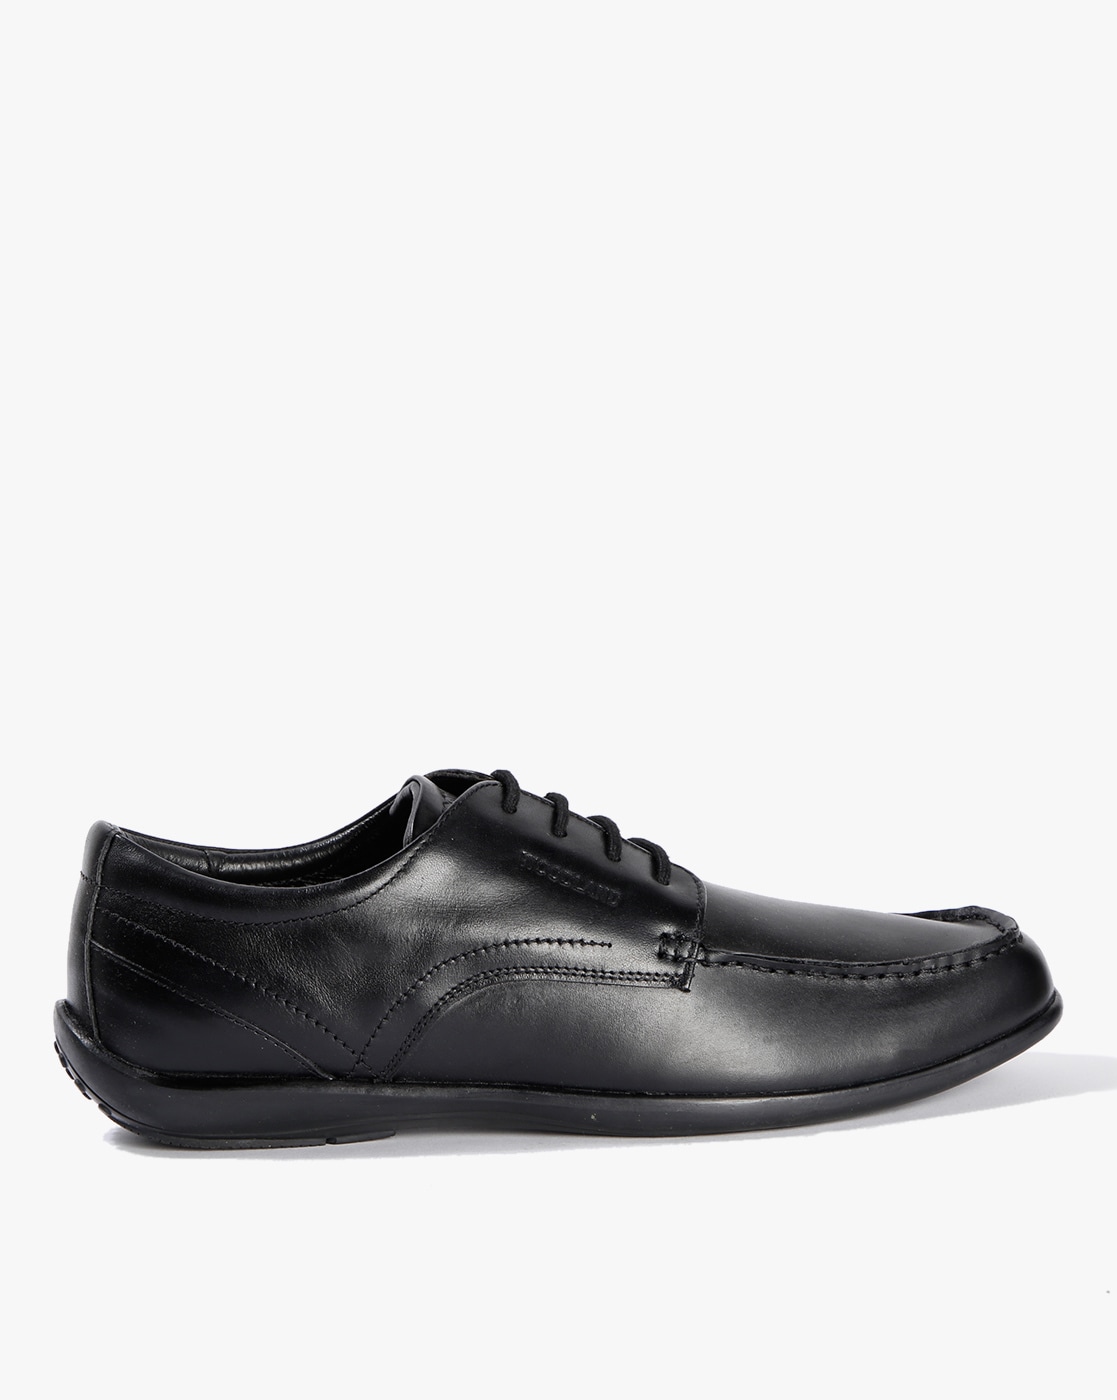 Buy Black Formal Shoes for Men by 